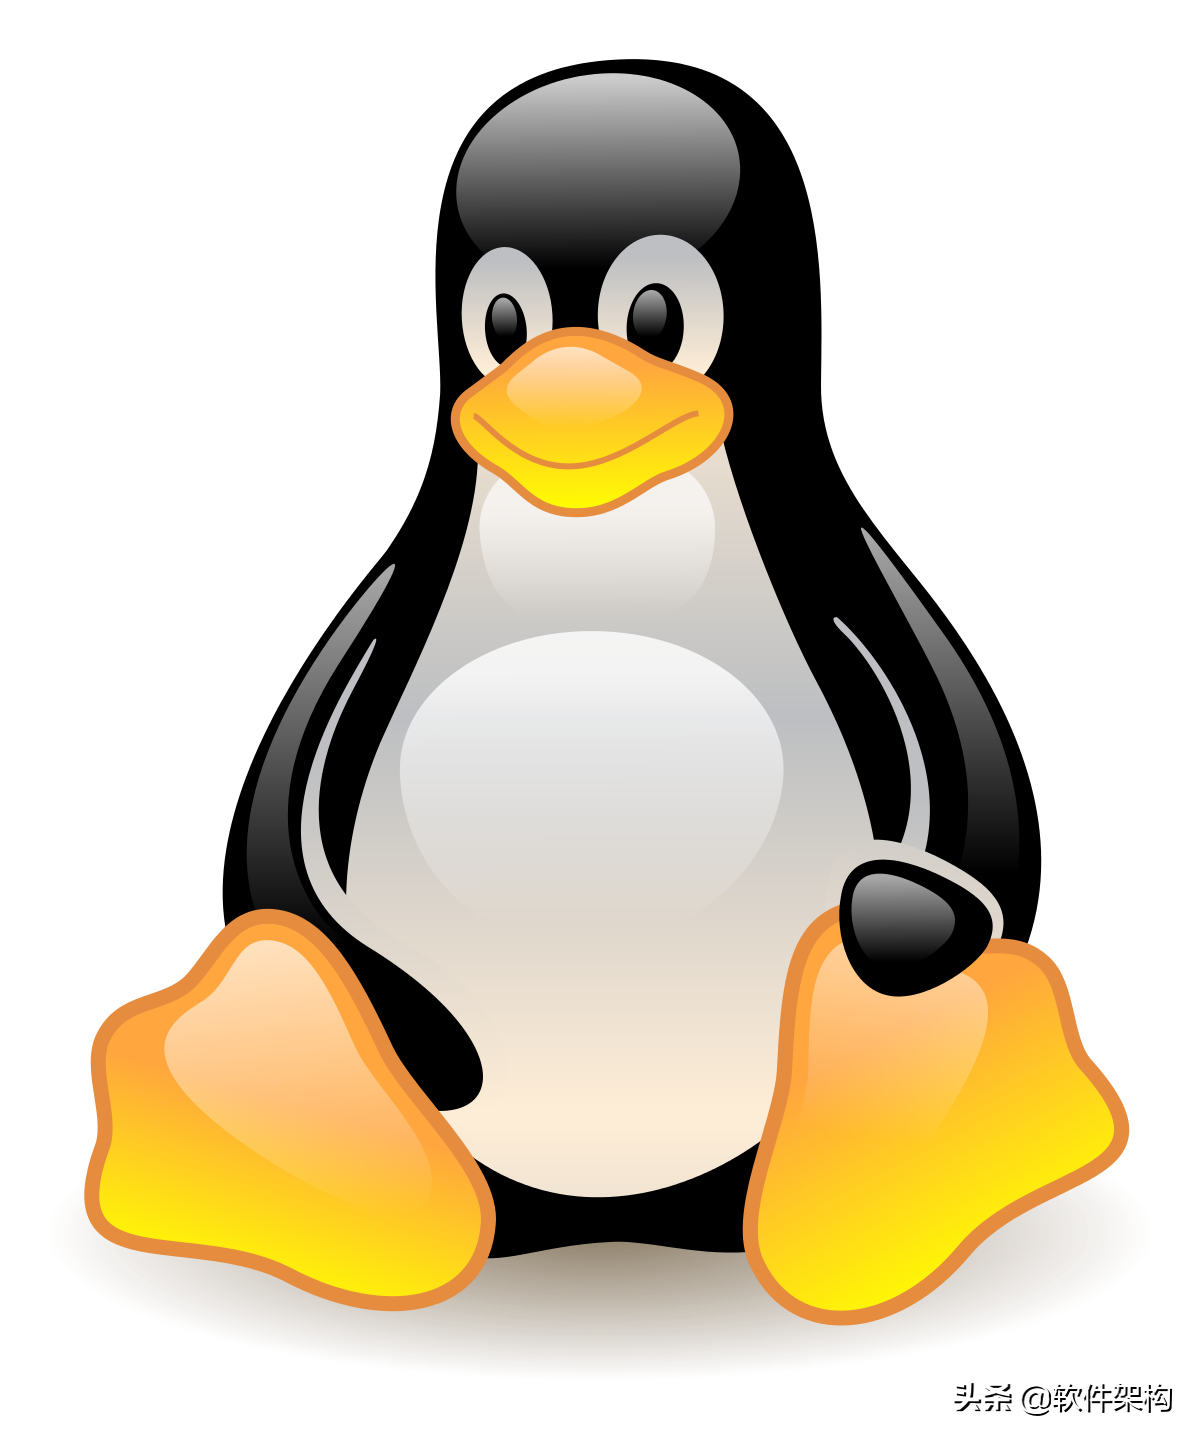 Linux 软件安装到 /usr，/usr/local/ 还是 /opt 目录？